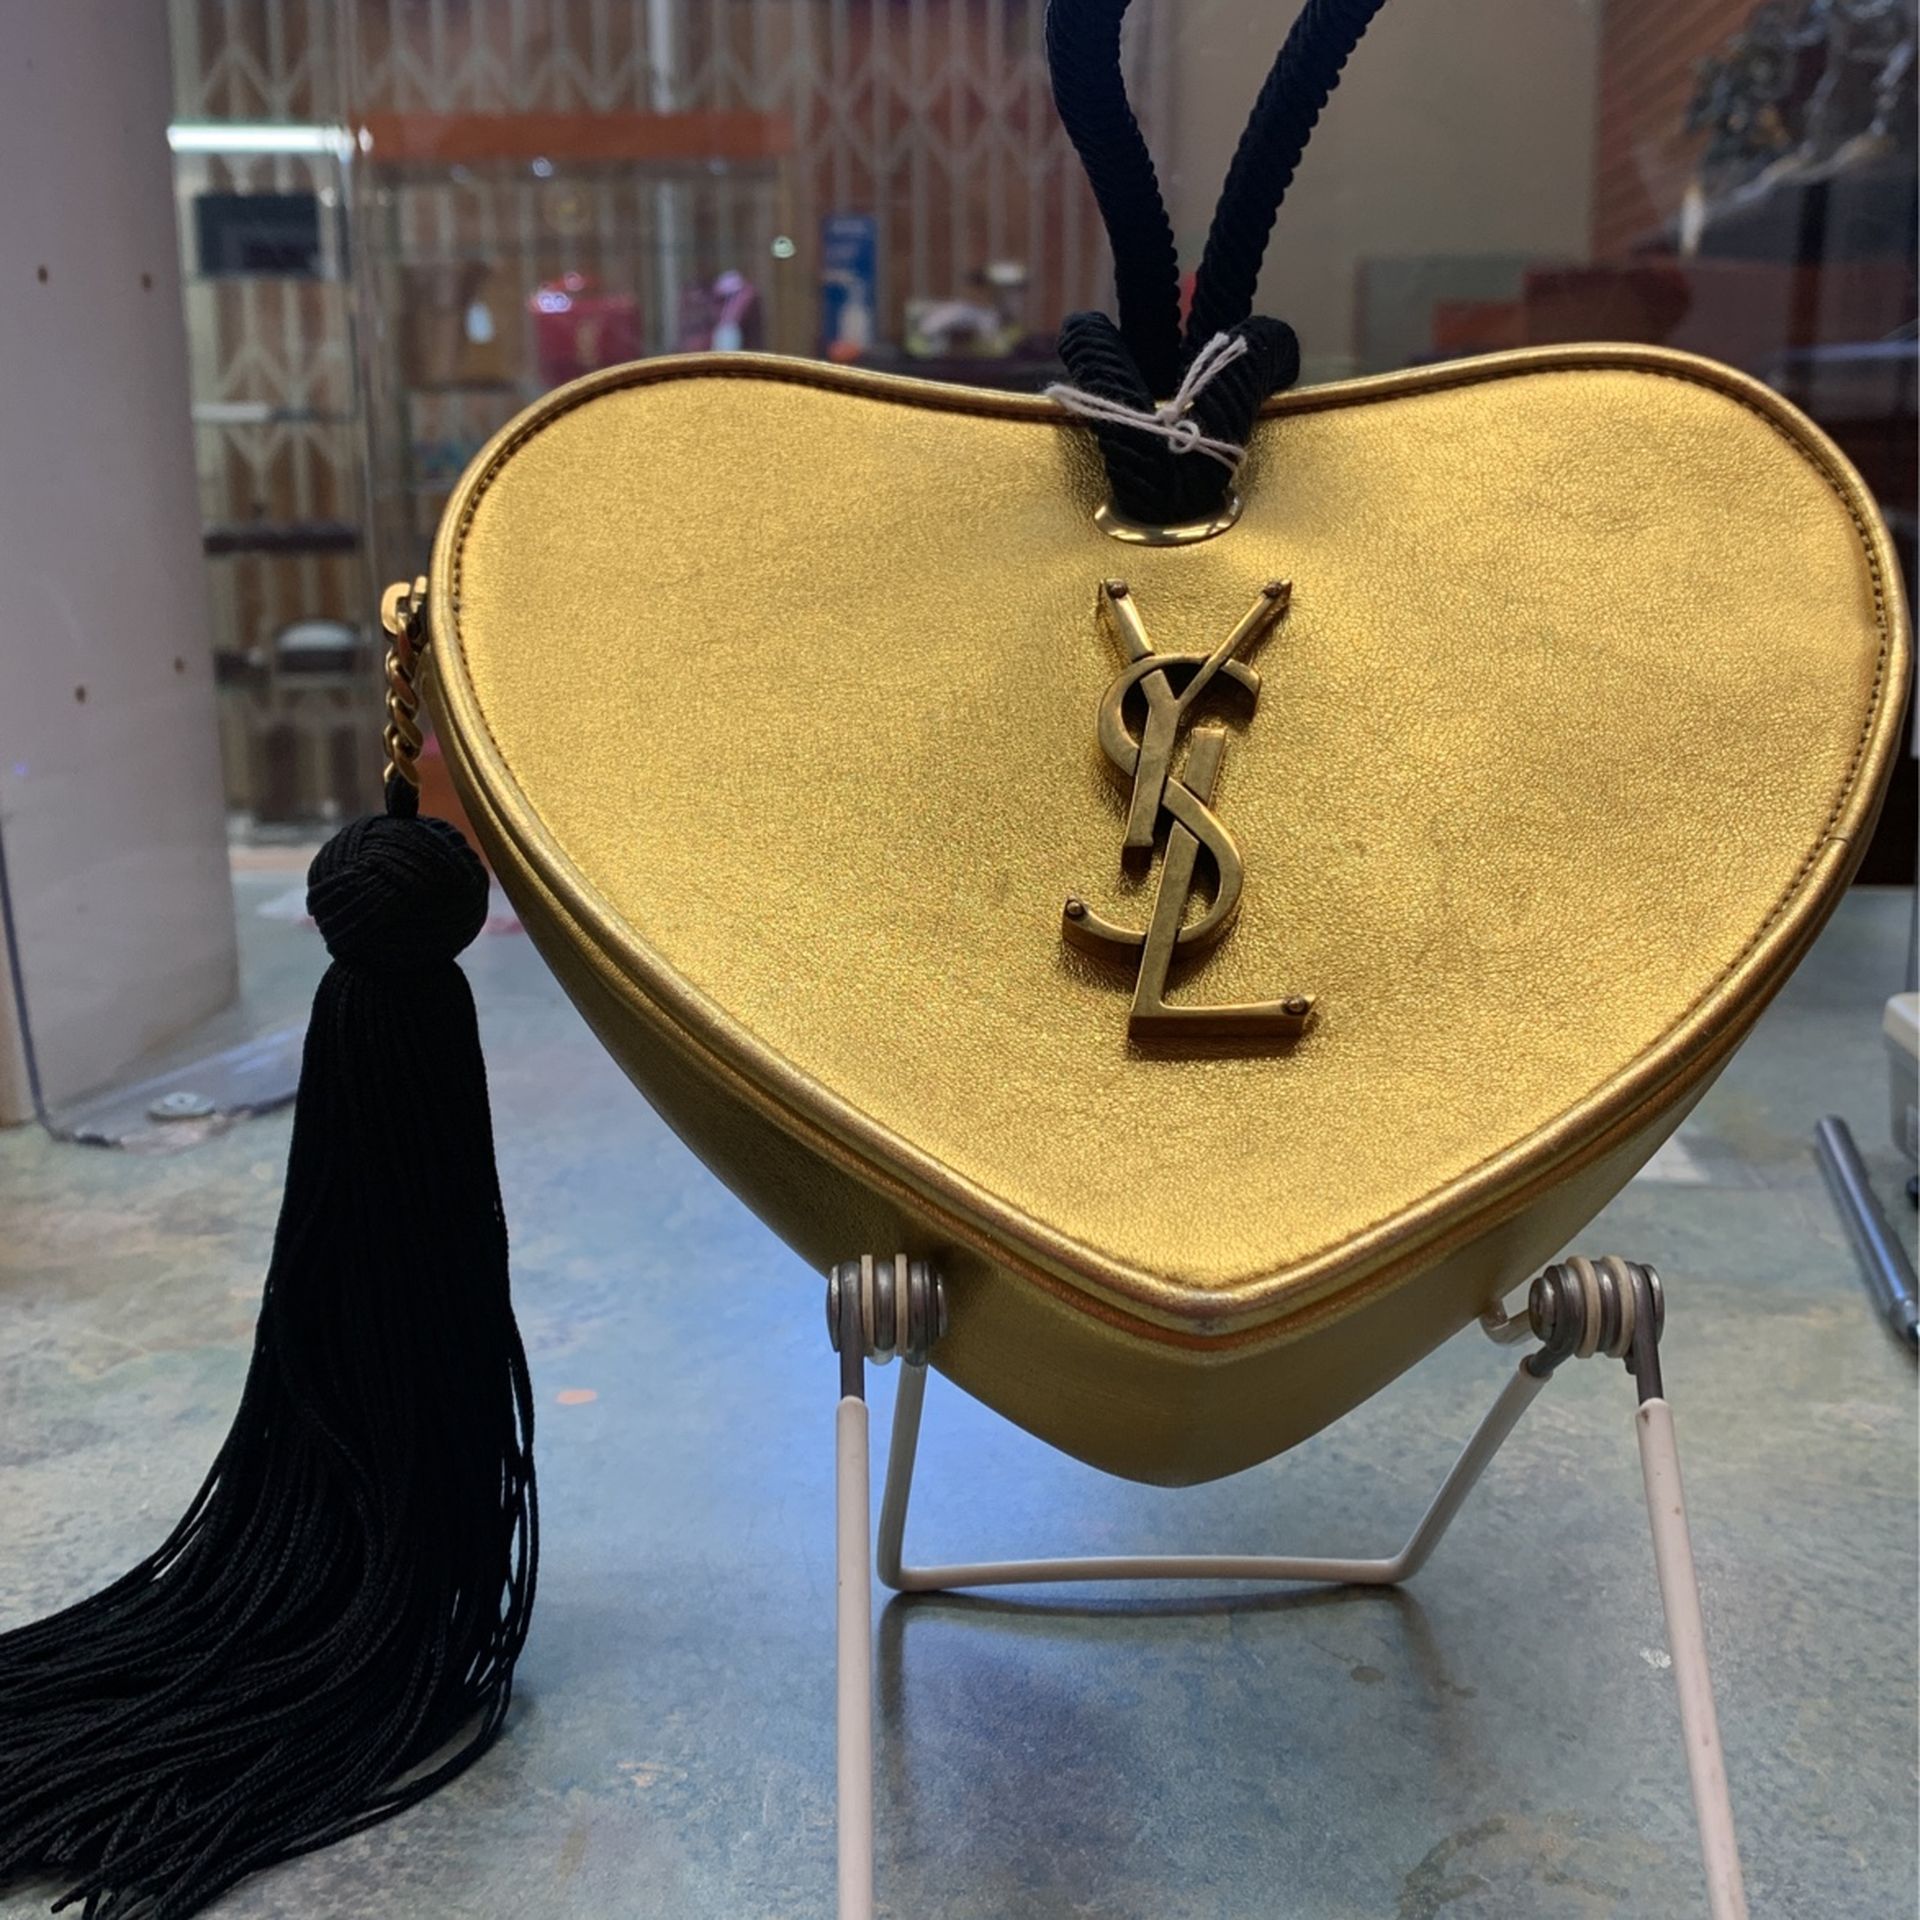 YSL Gold Heart Tassel Bag for Sale in Oakland, CA - OfferUp